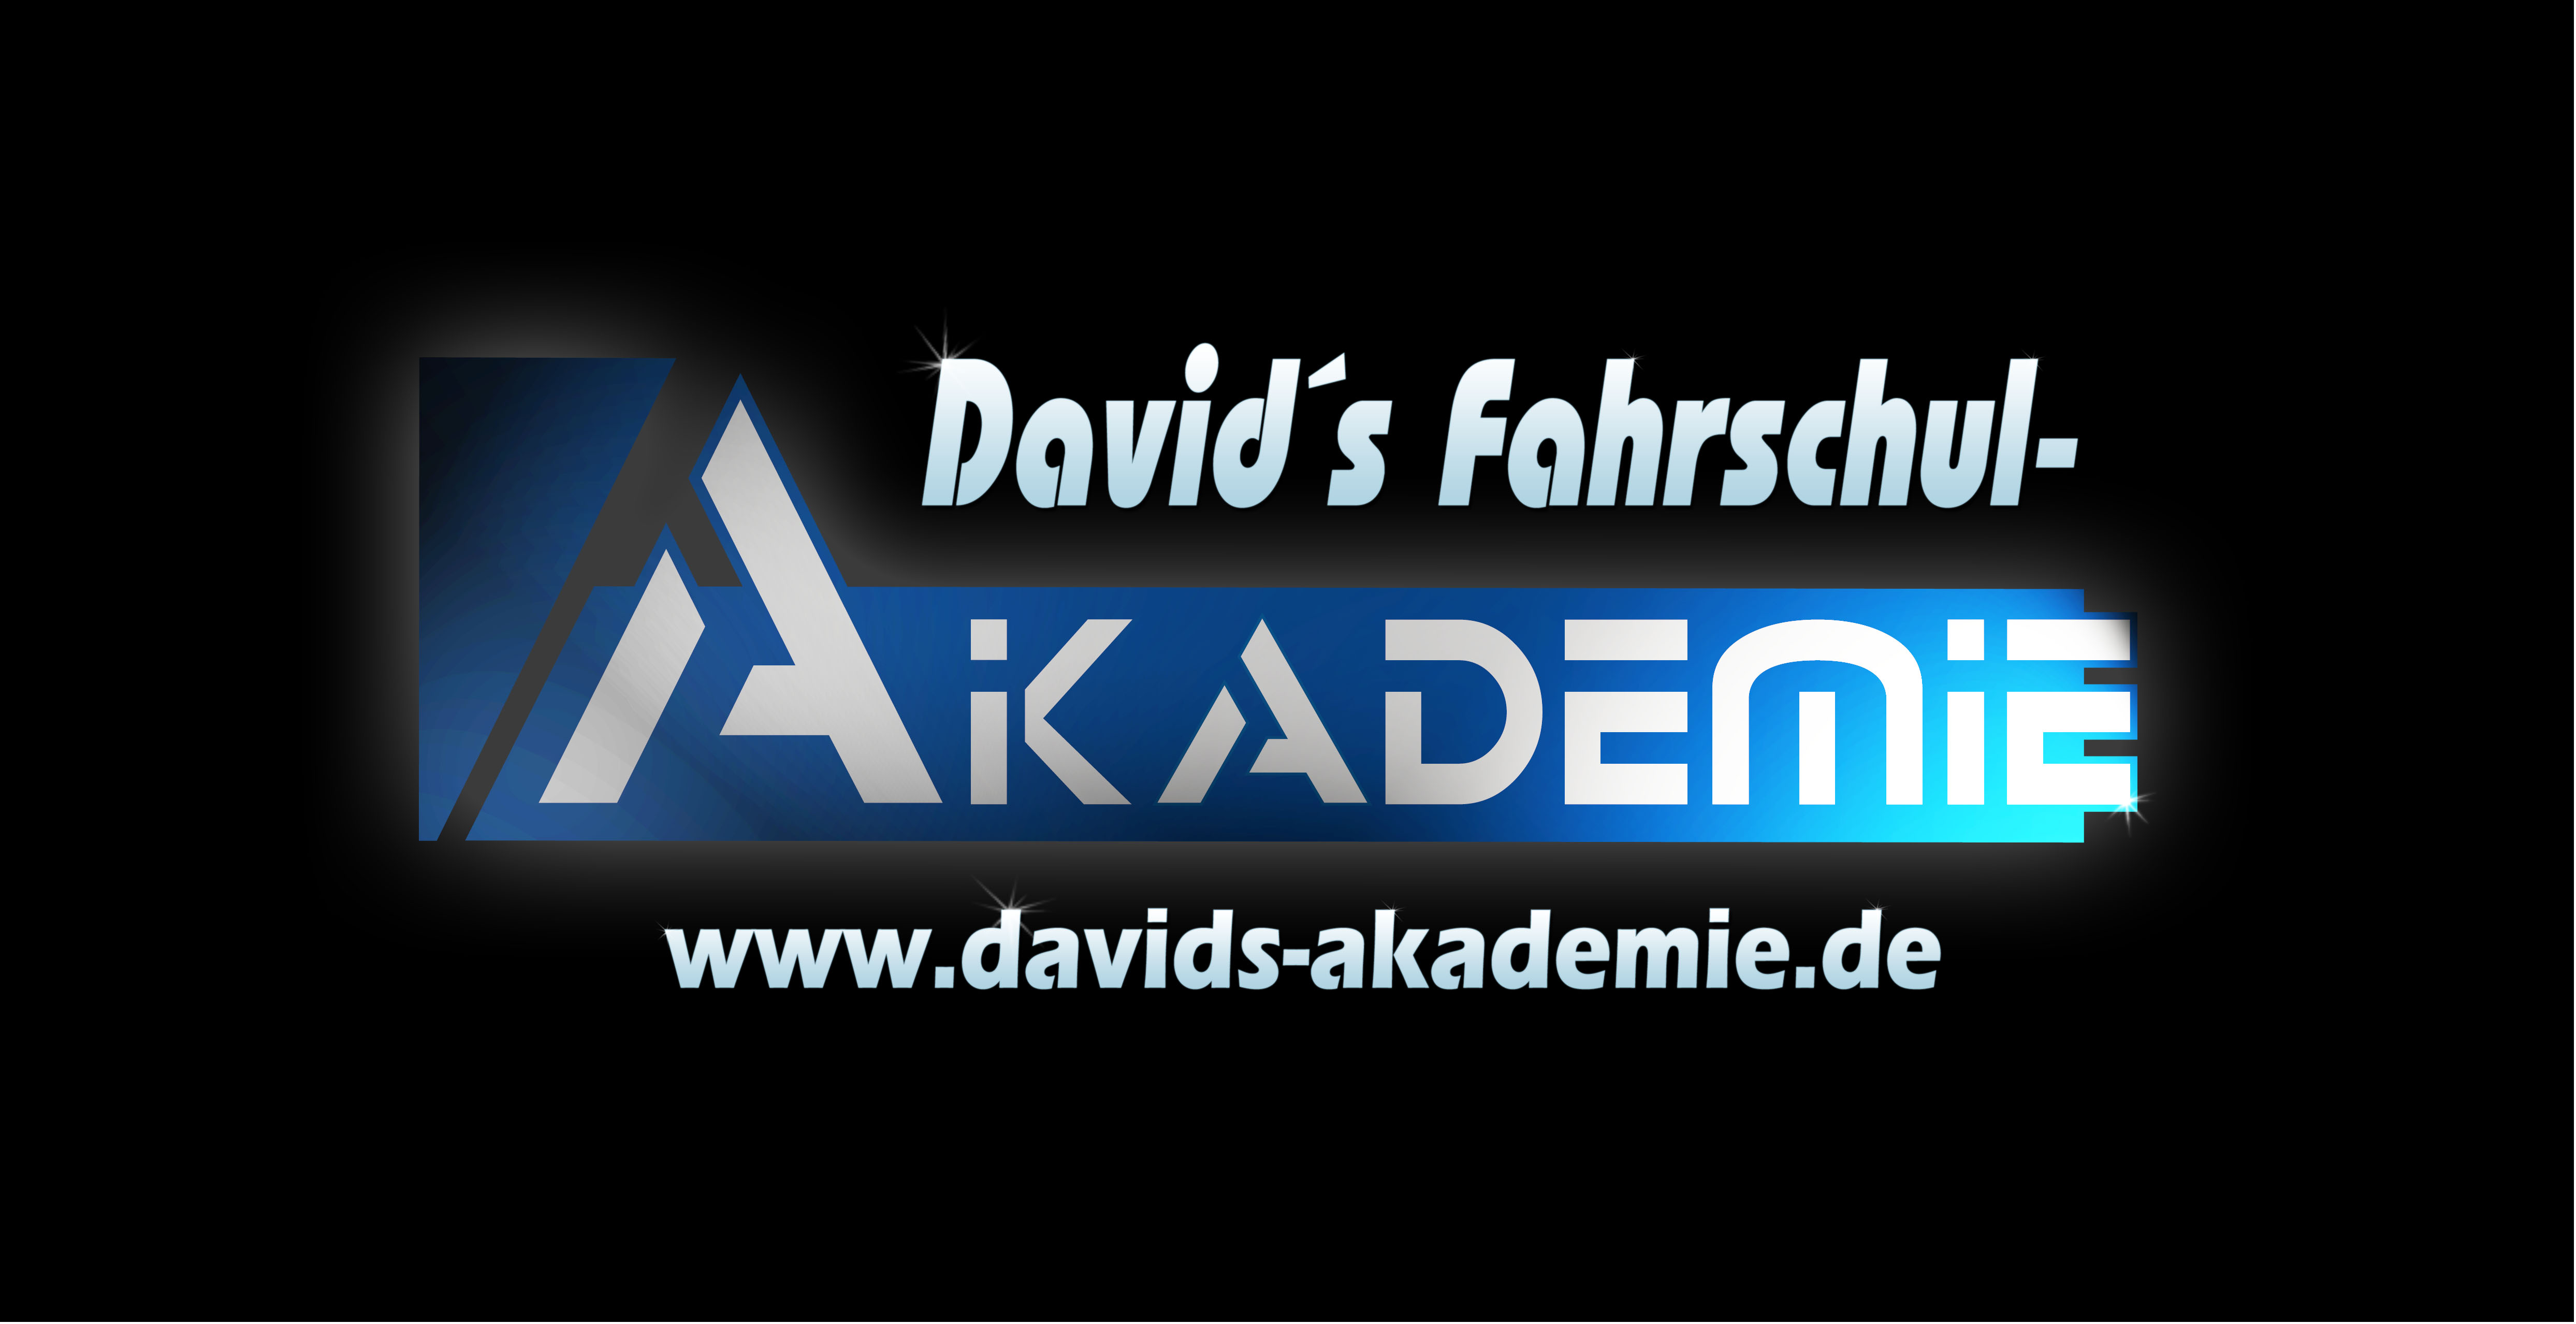 David's Fahrschul-Akademie